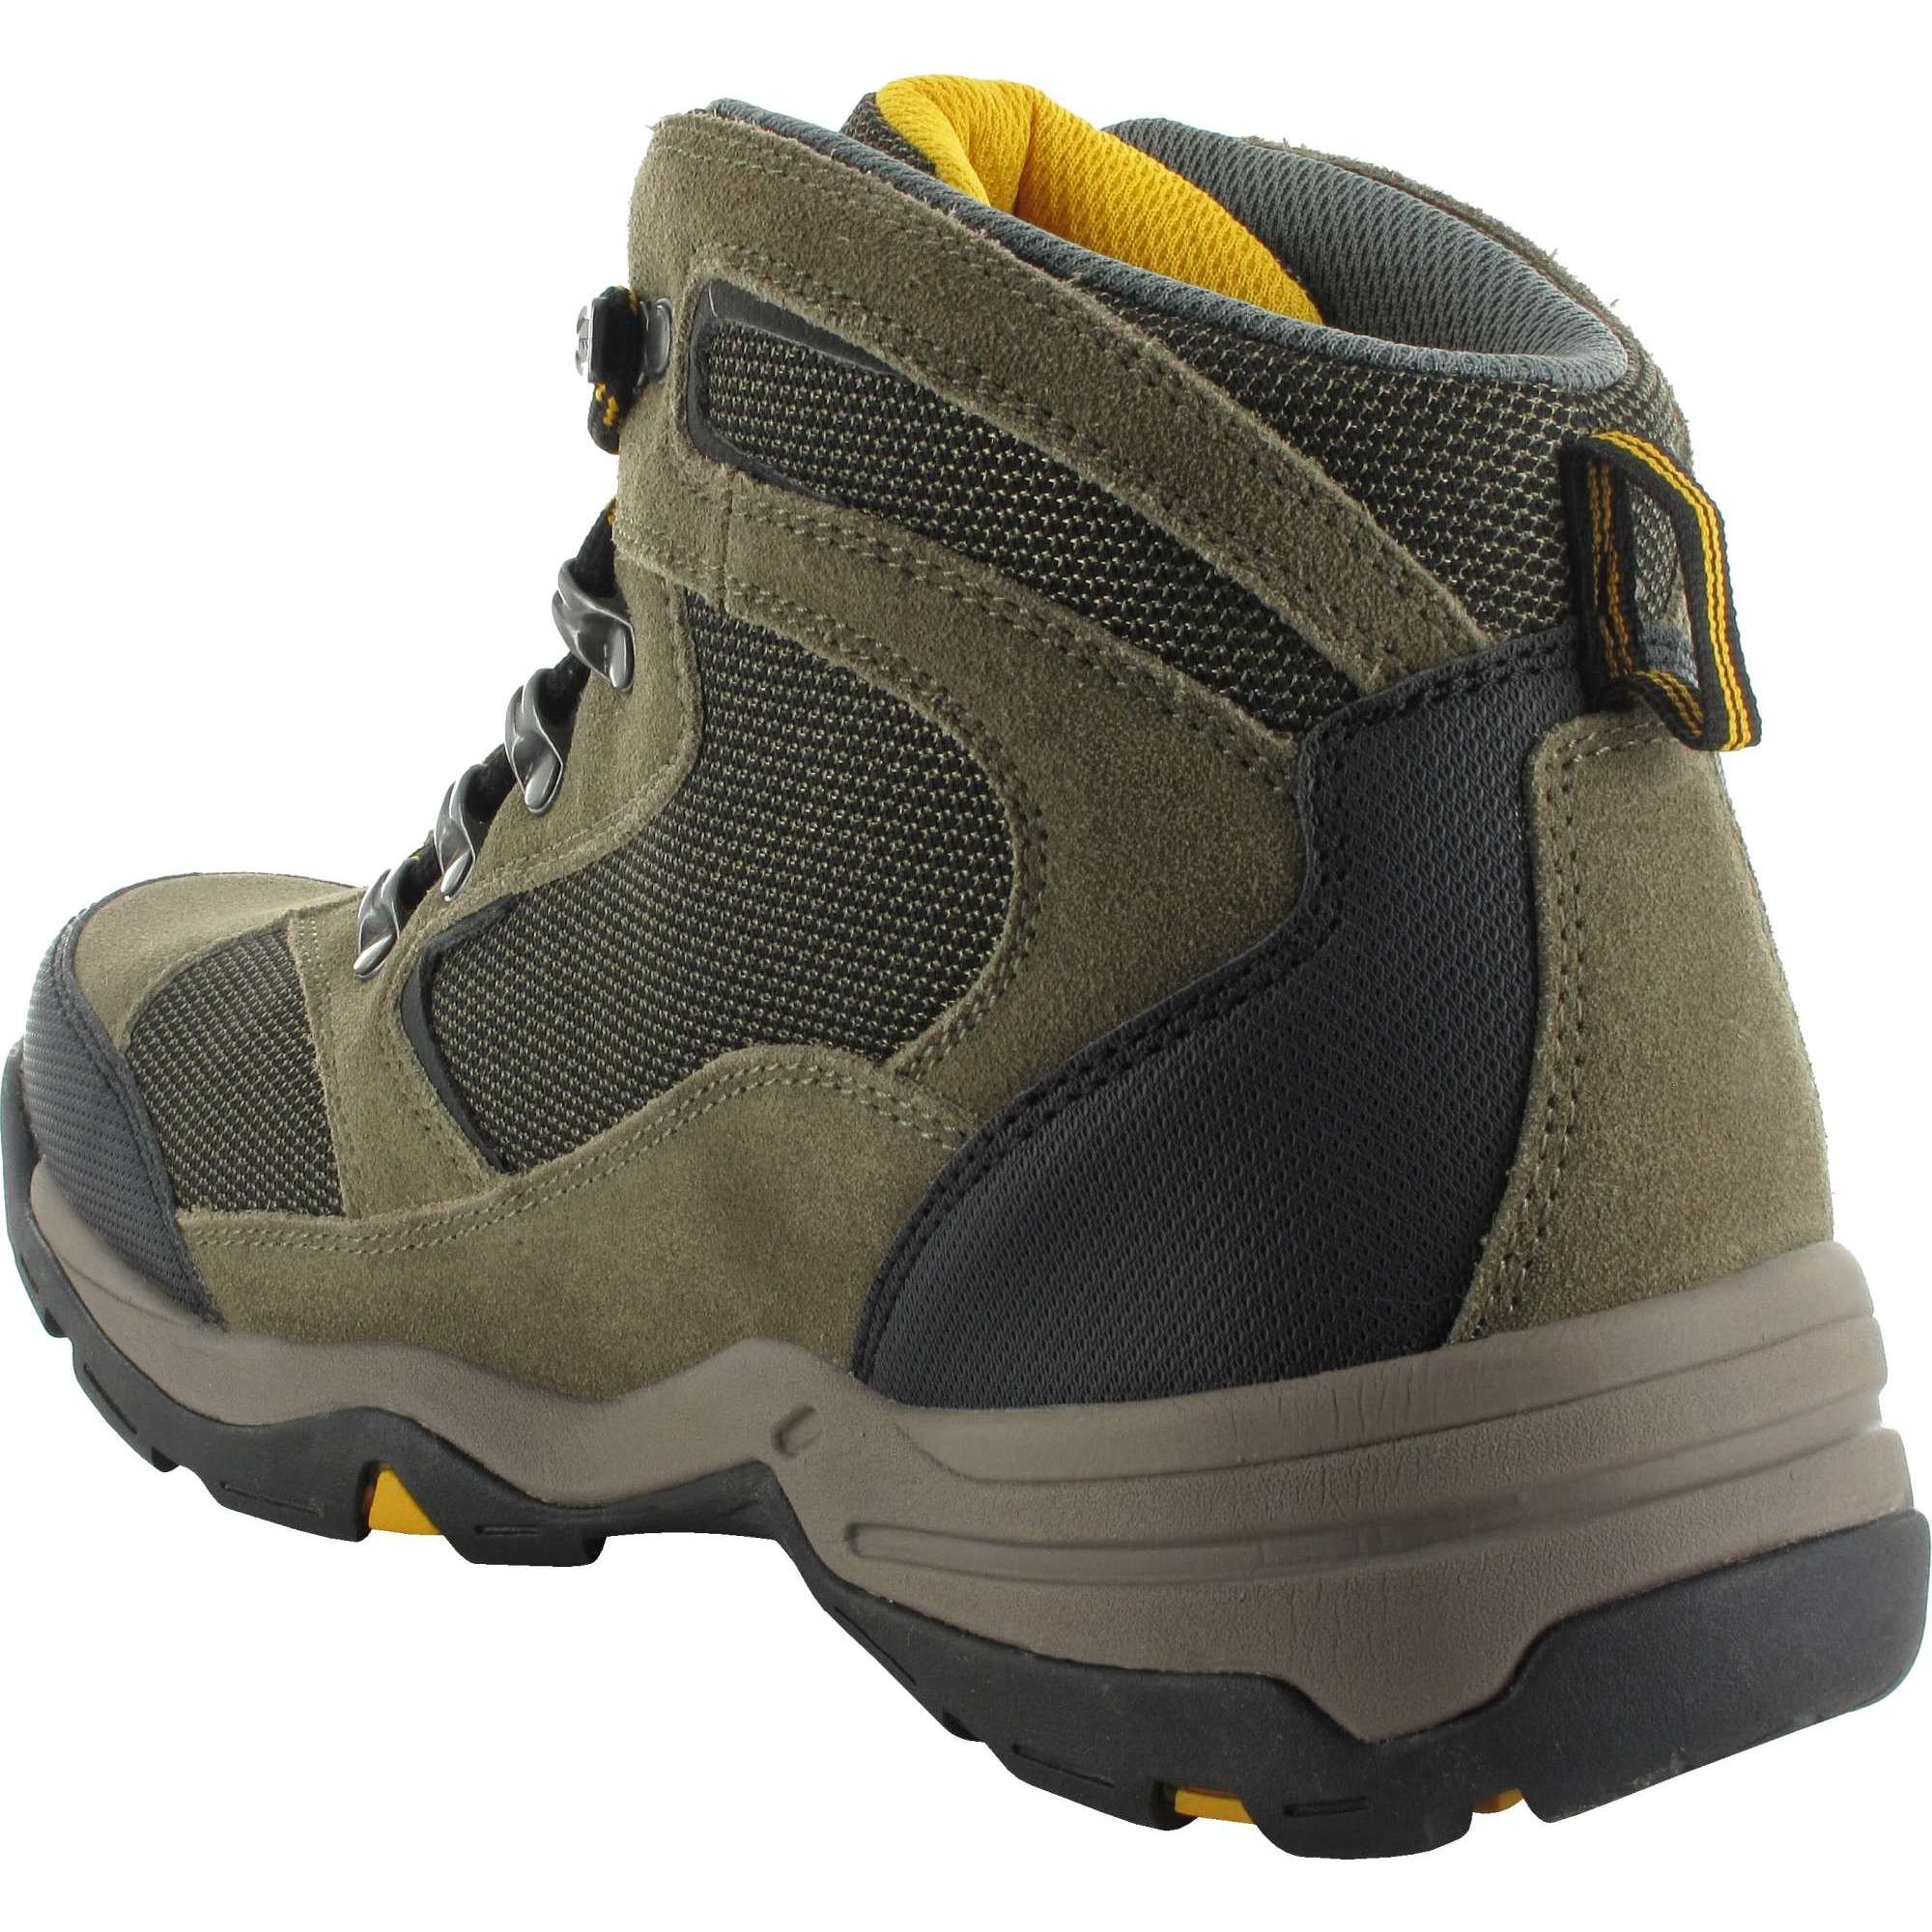 Hi-Tec Storm Waterproof Light Hiking Boots